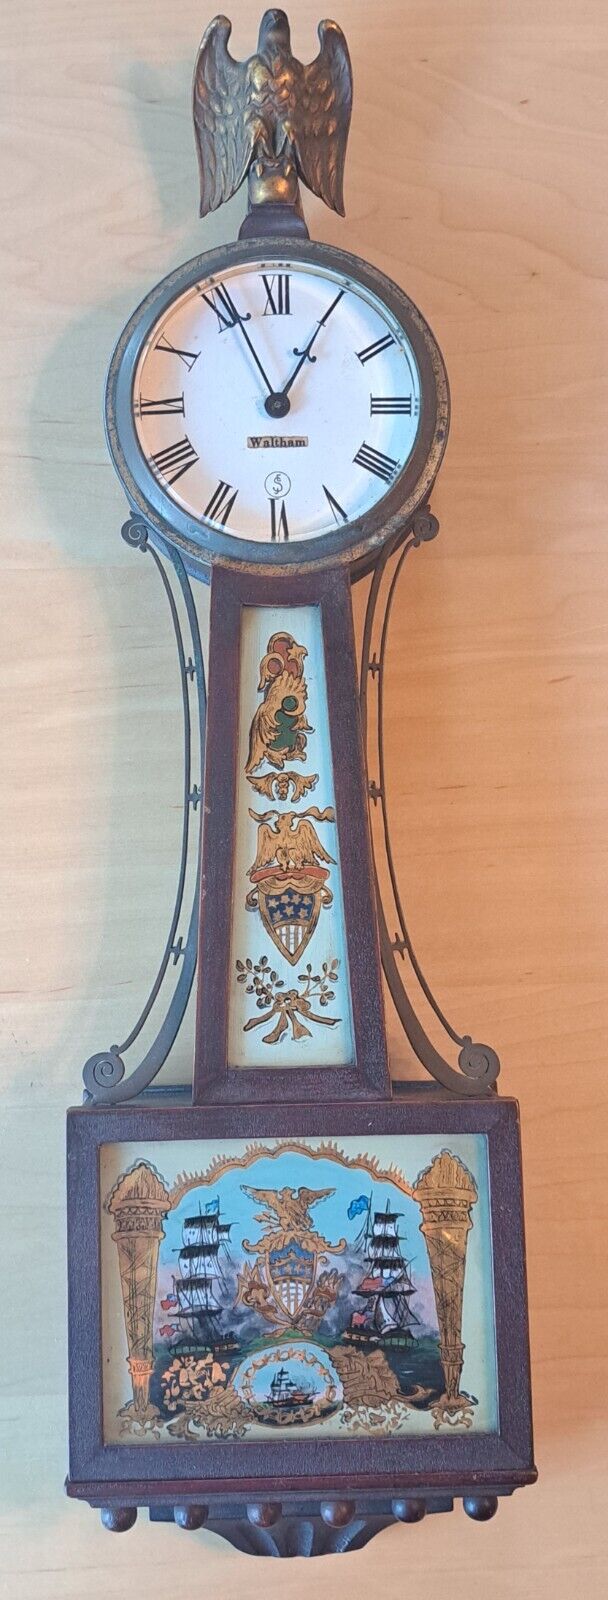 Antique Waltham Banjo Wall Clock With Mechanical Movement ~ Parts Repair Restore